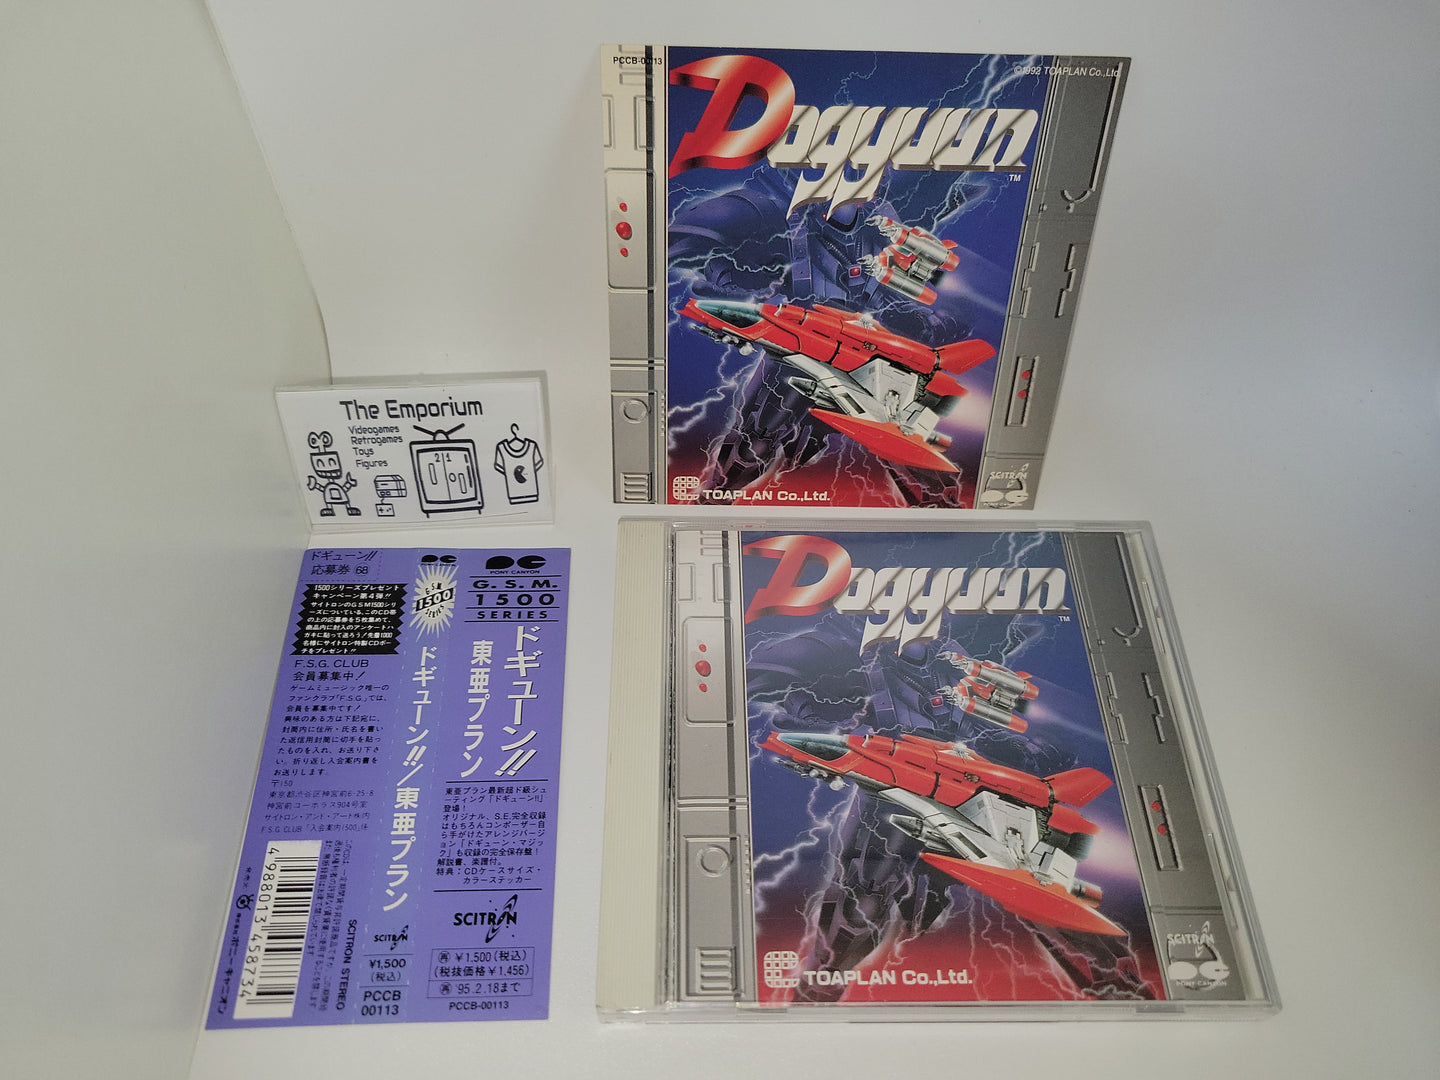 Dogyuun!! - Music cd soundtrack